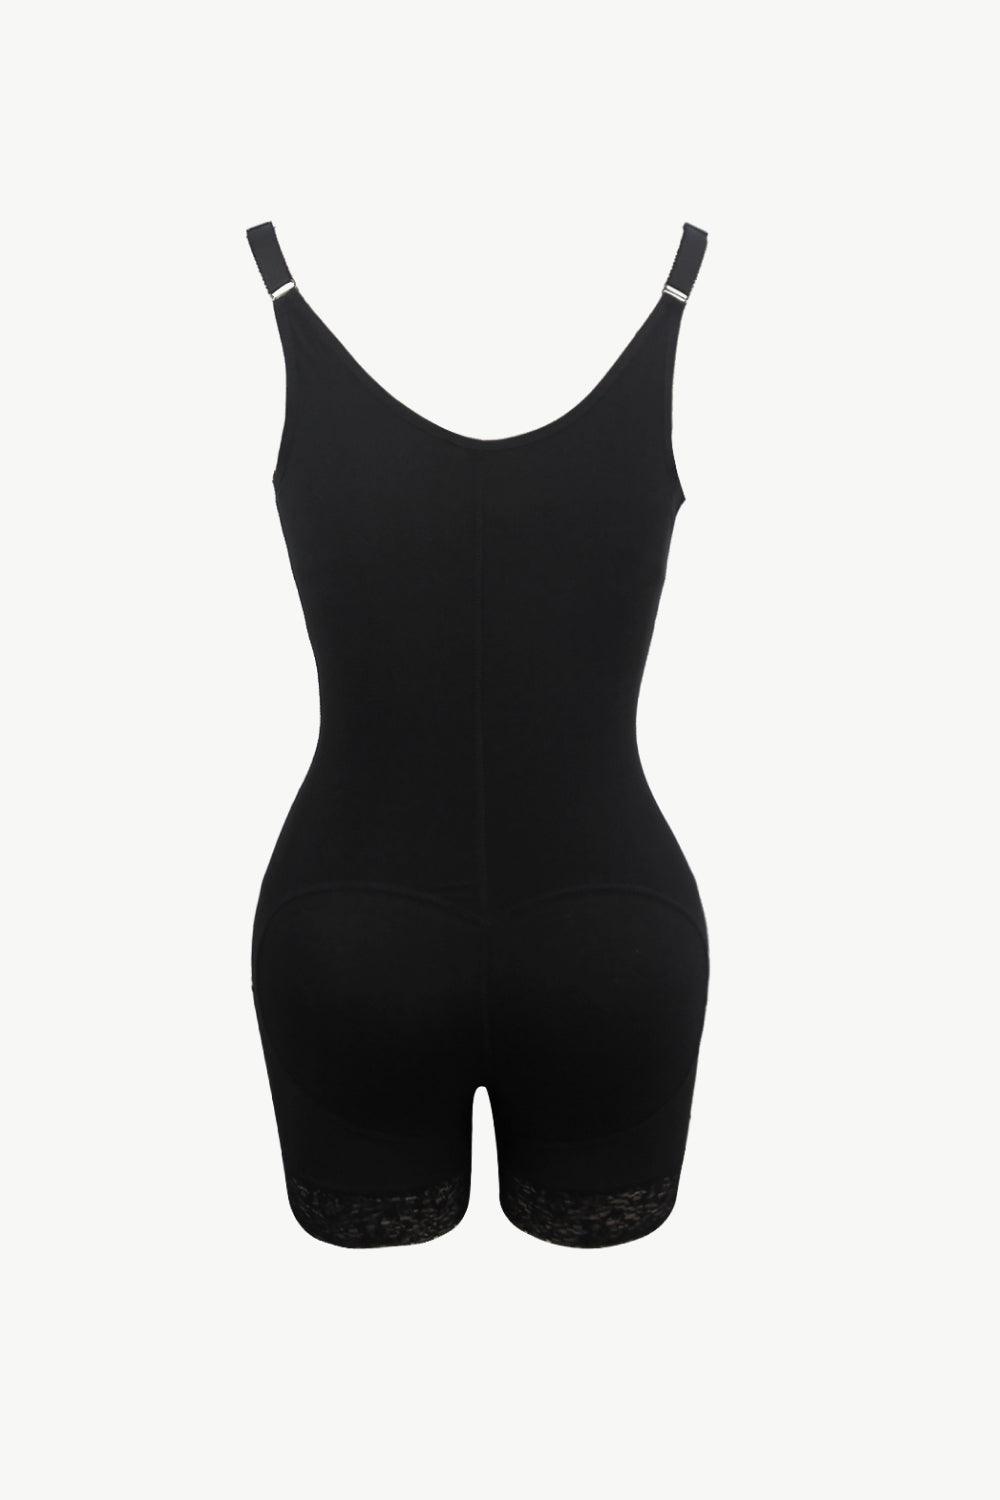 Full Size Under-Bust Adjustable Strap Shaping Bodysuit - Shanae Deon